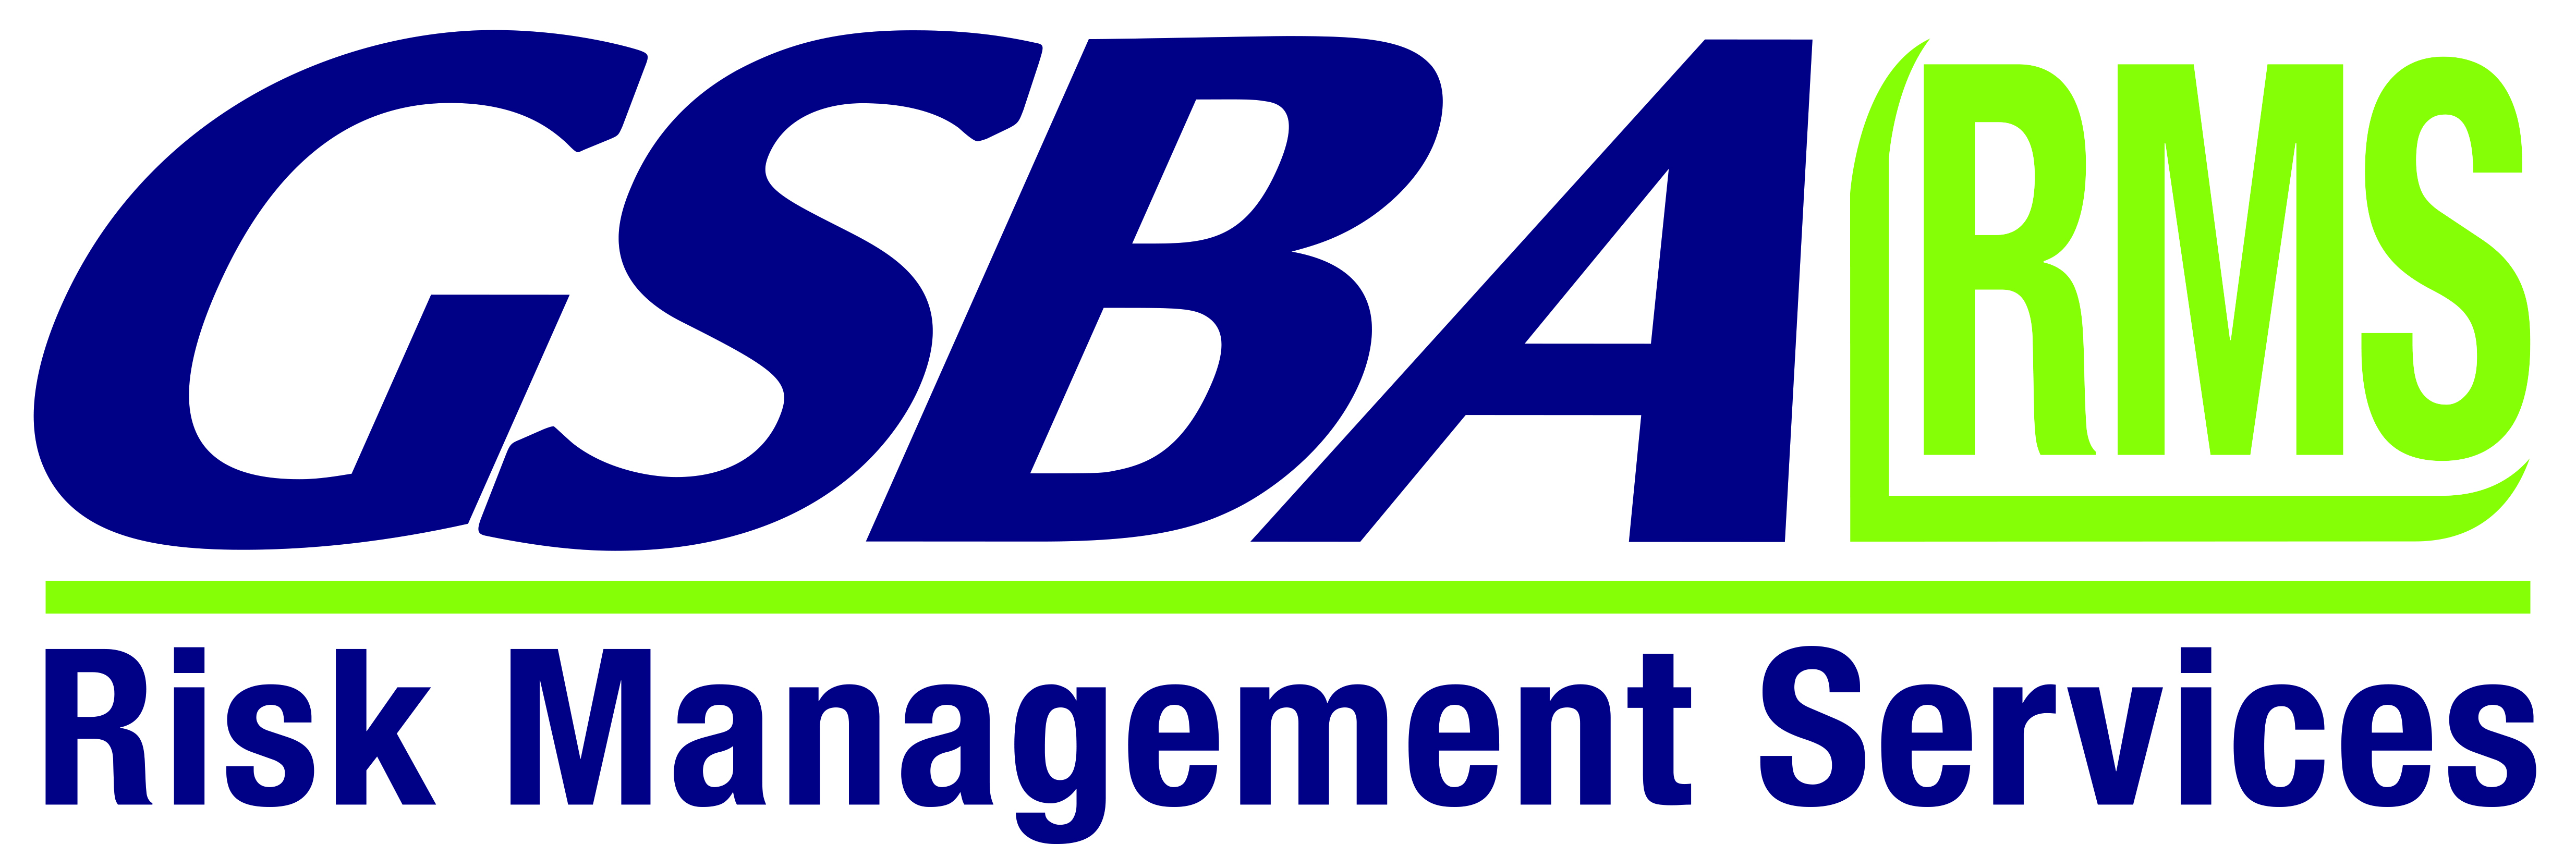 GSBA Risk Management Services